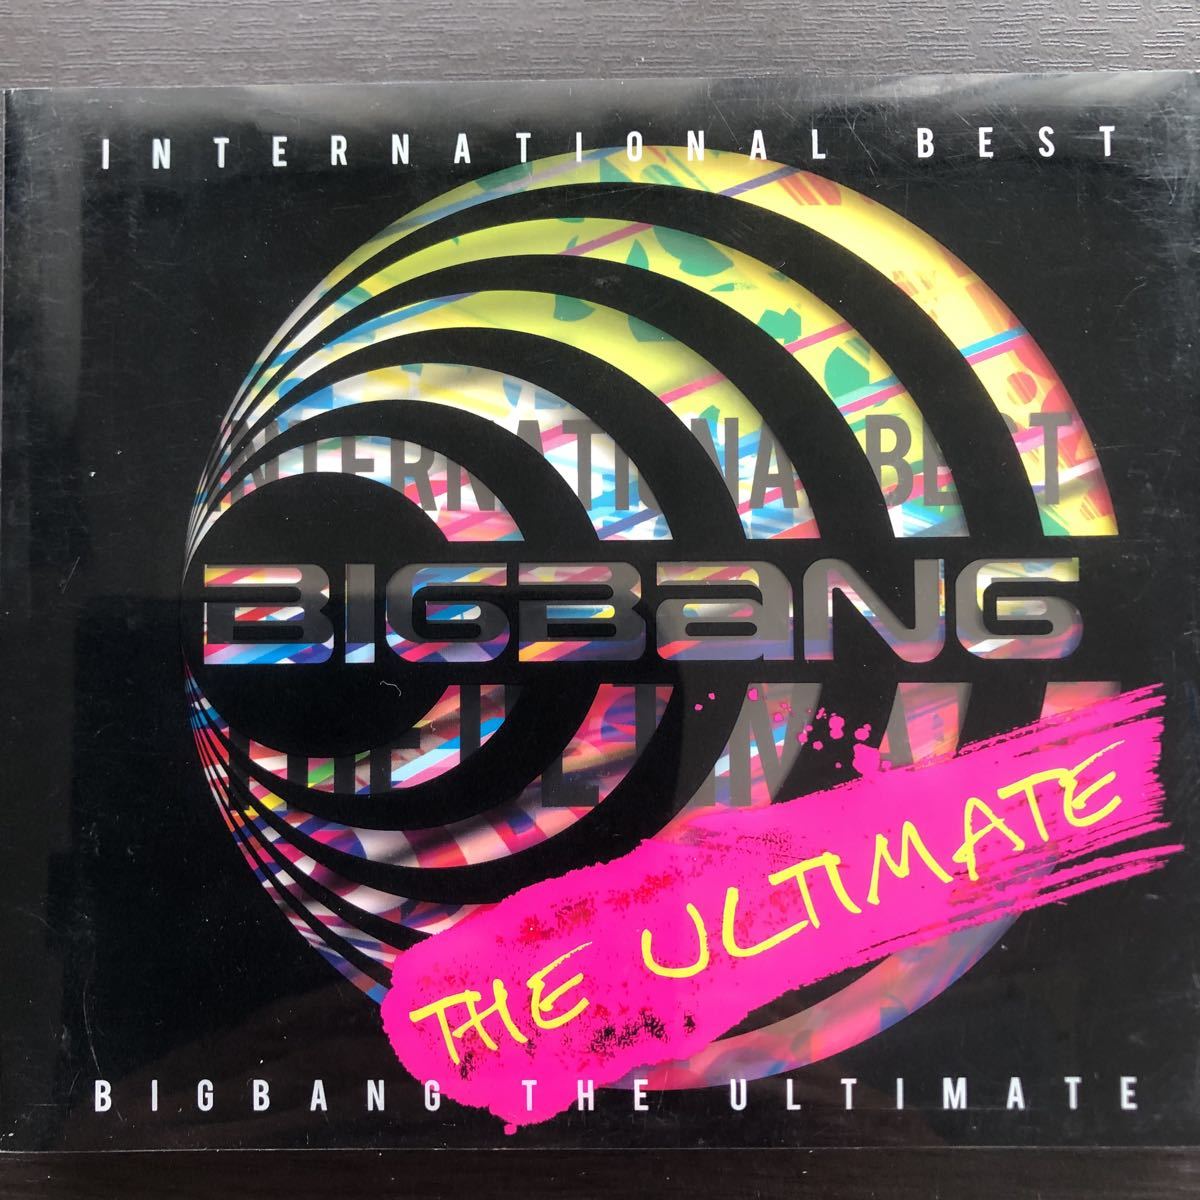 Cd Bigbang Best The Ultimate International ビッグバン ベスト盤 韓国 注目の福袋をピックアップ The